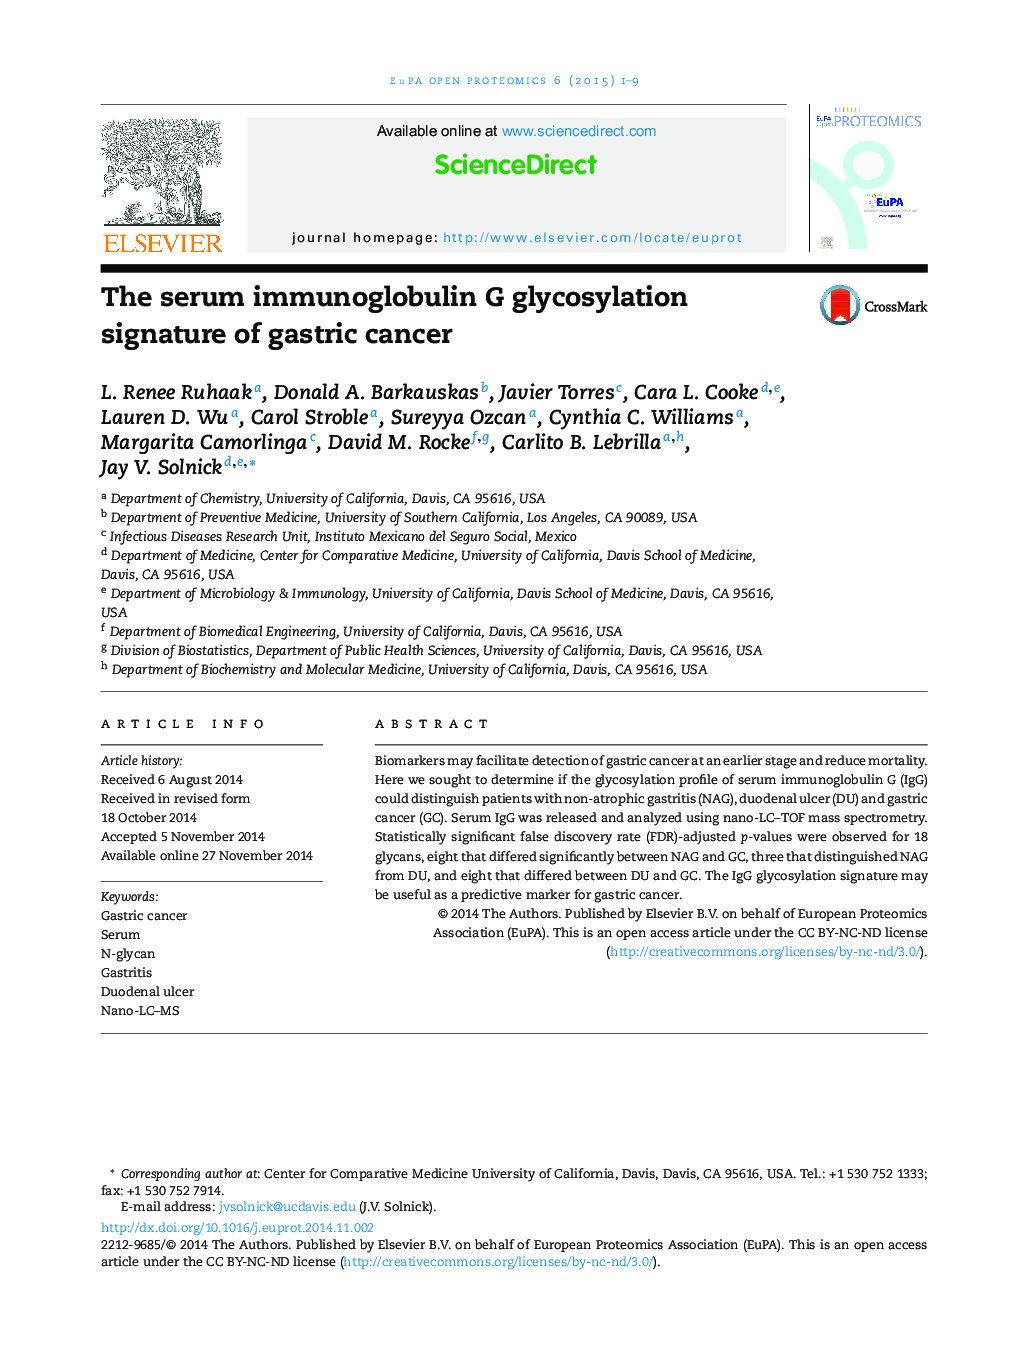 The serum immunoglobulin G glycosylation signature of gastric cancer 